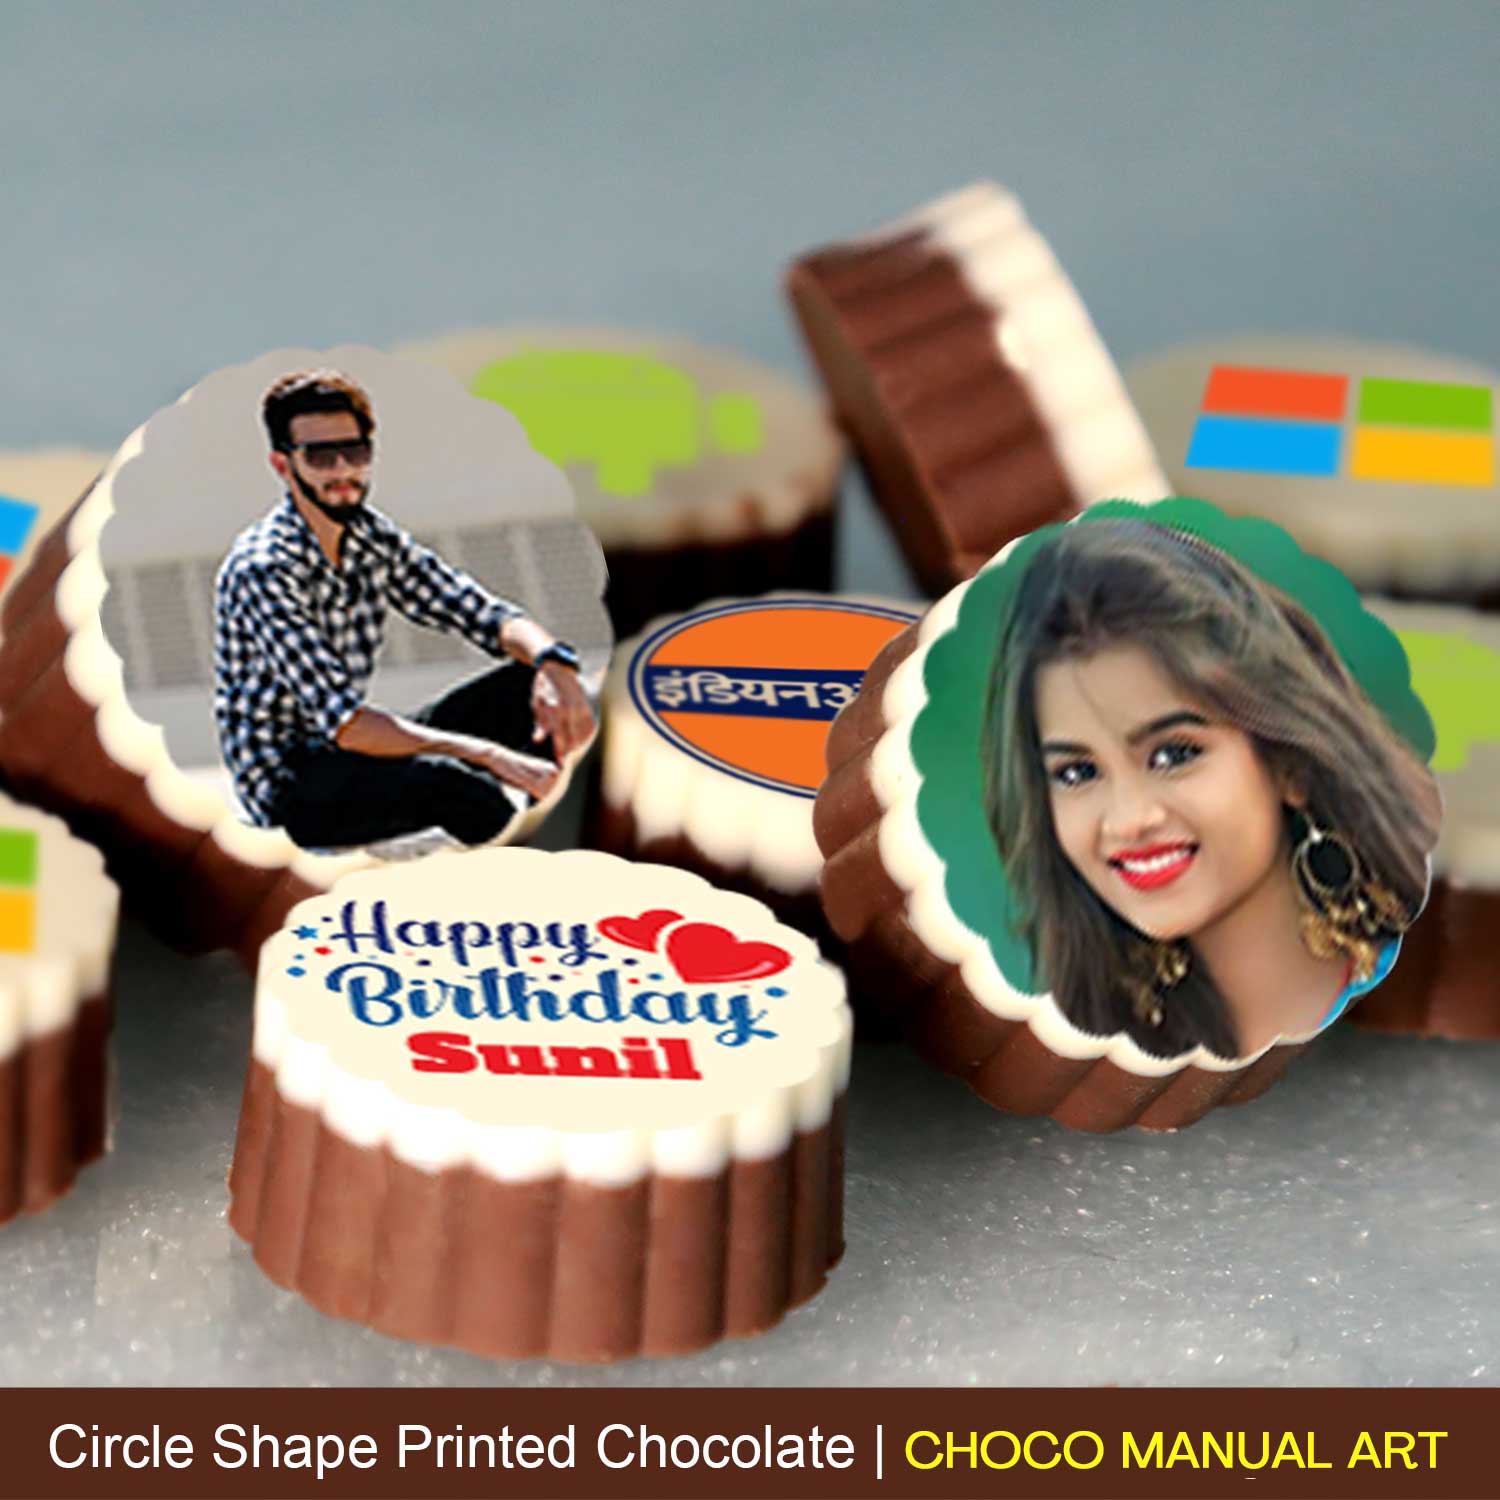 Customised Chocolates Box with Printed Photo